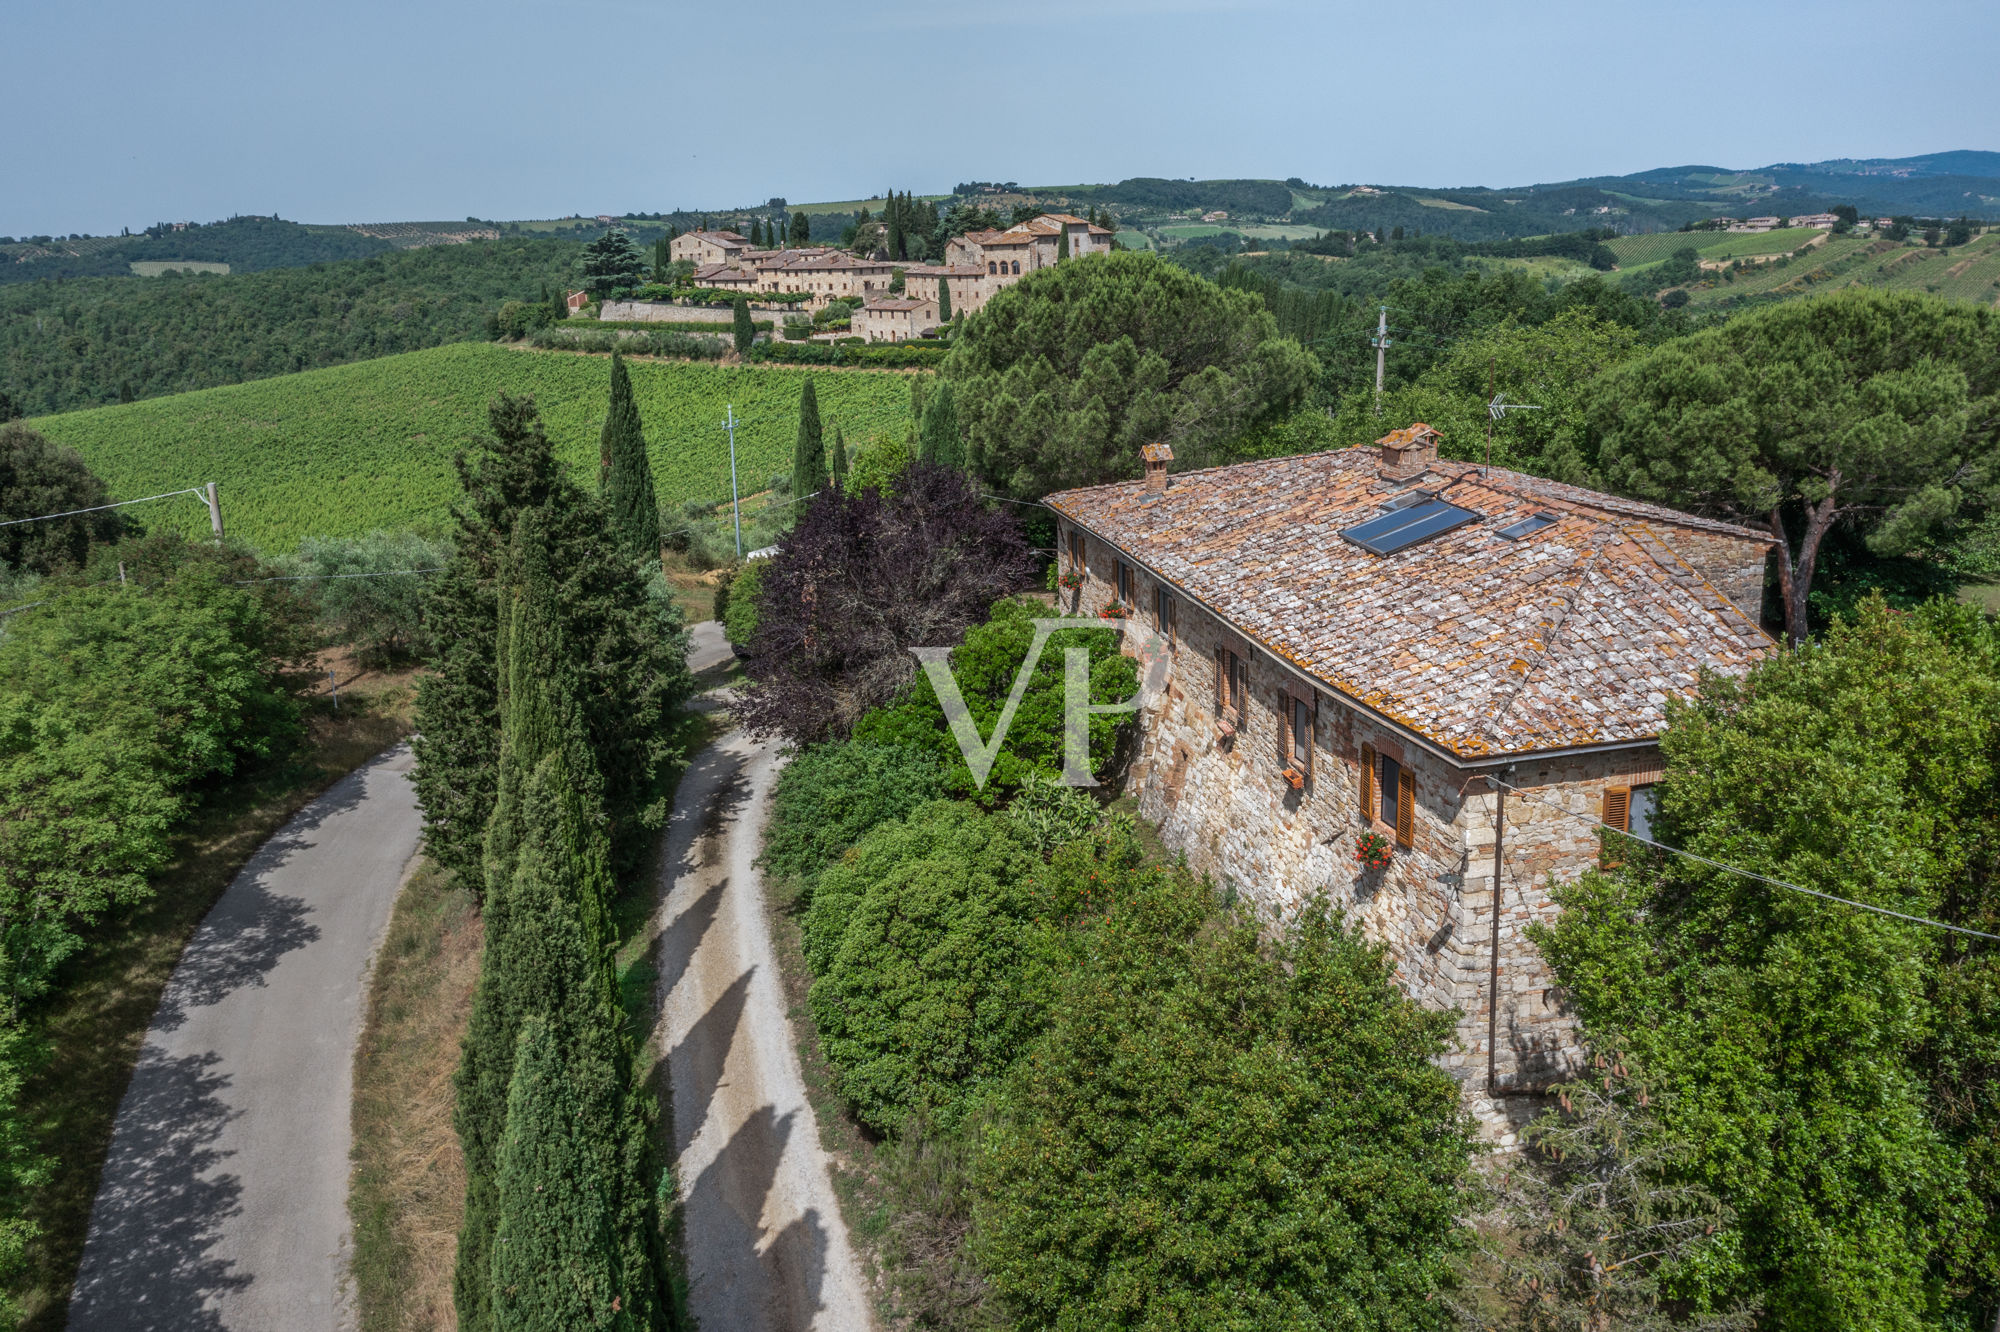 Chianti, Toscana: magnífica finca histórica con villa independiente y dos anexos rodeados de vegetación